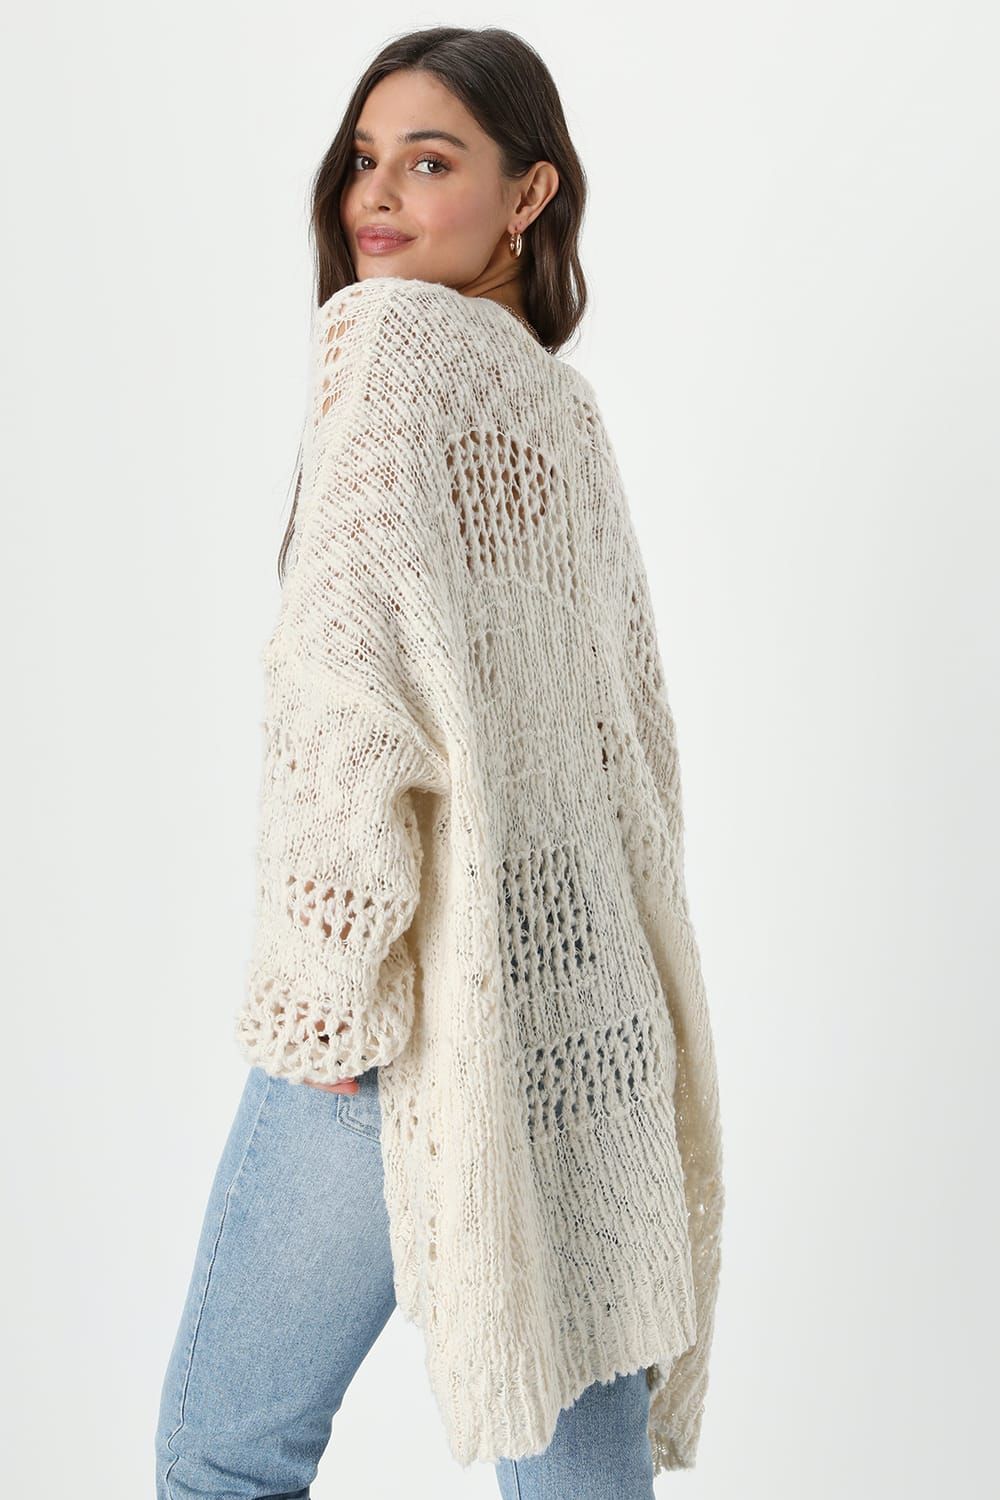 Crochet it Ain't So Ivory Oversized Cardigan Sweater | Lulus (US)